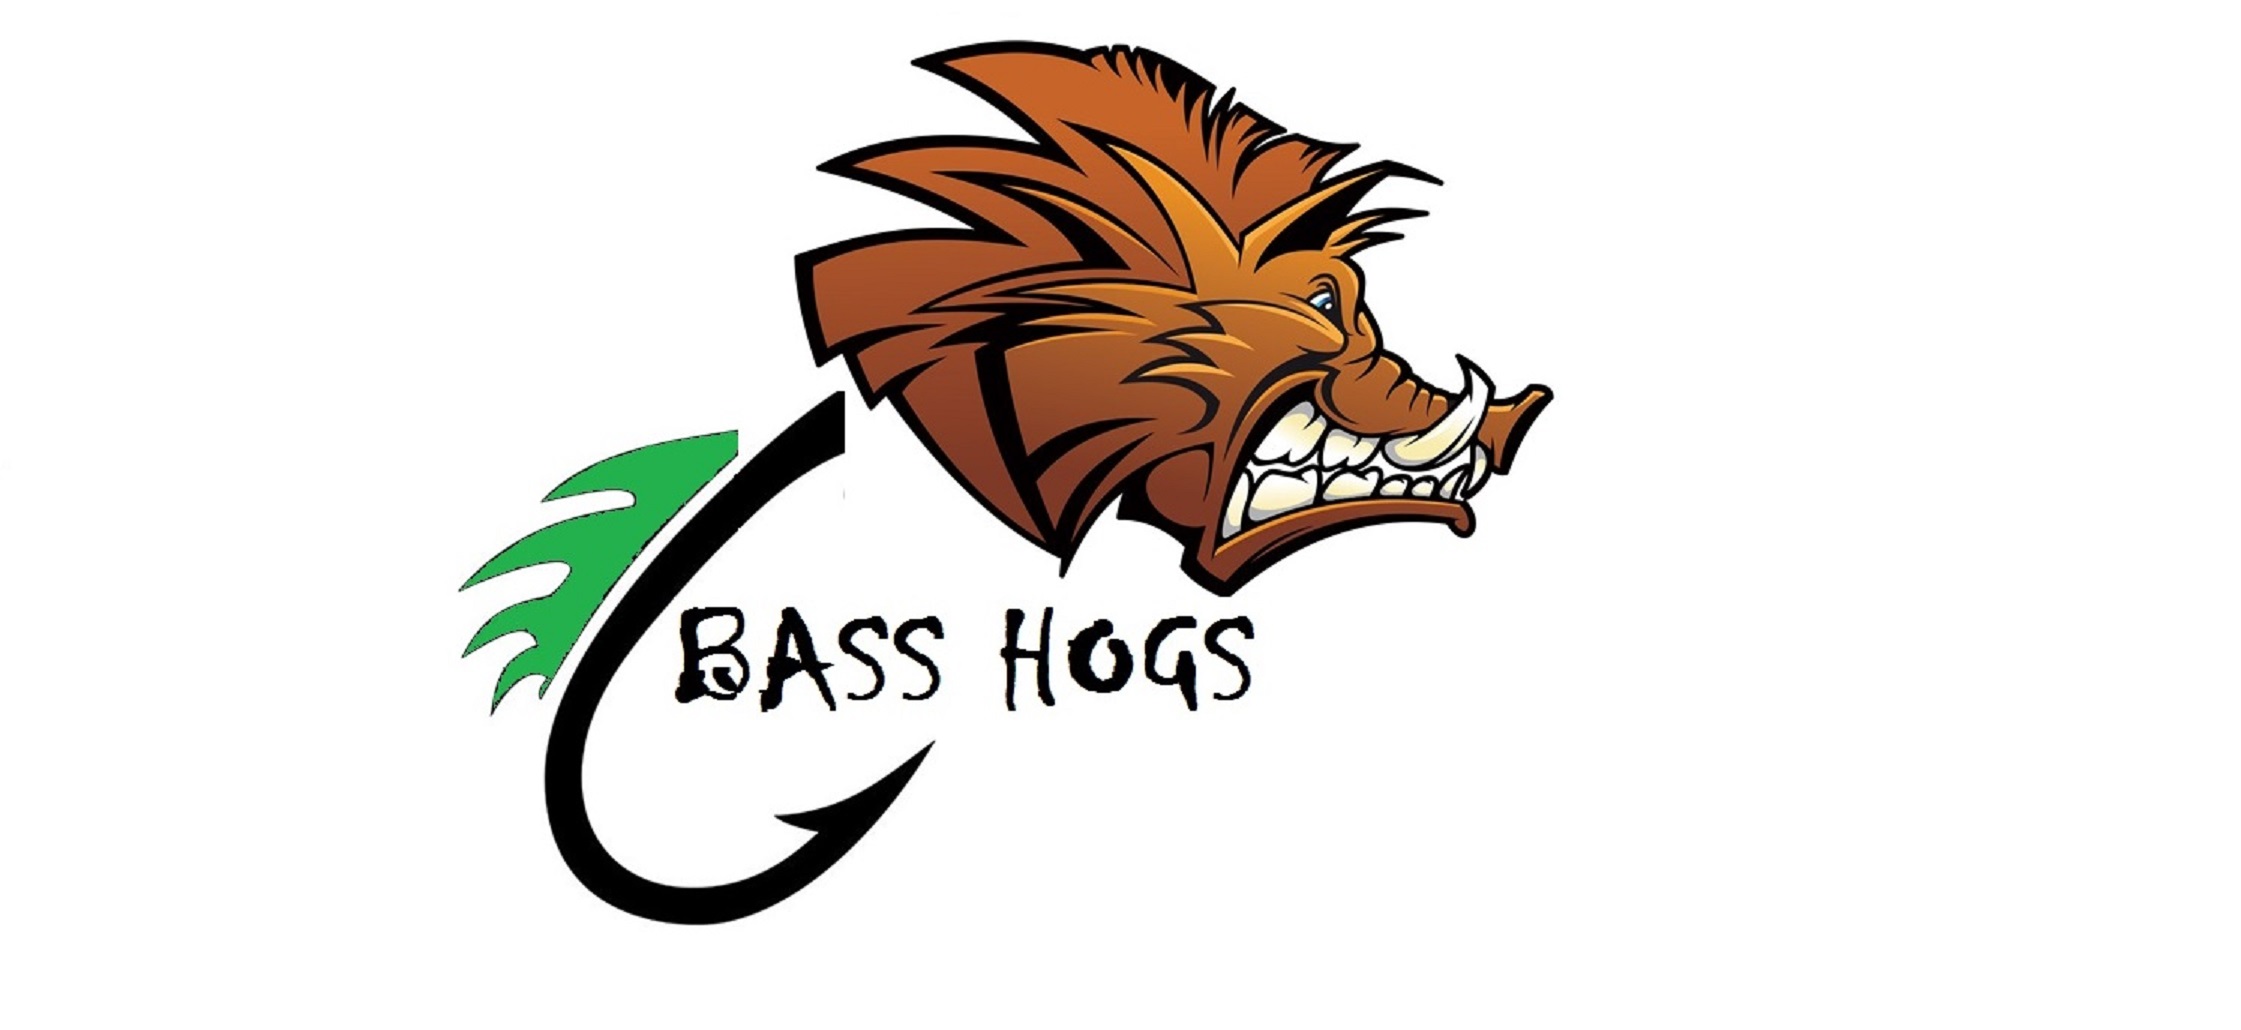 Bass Hog Logo 2.jpg